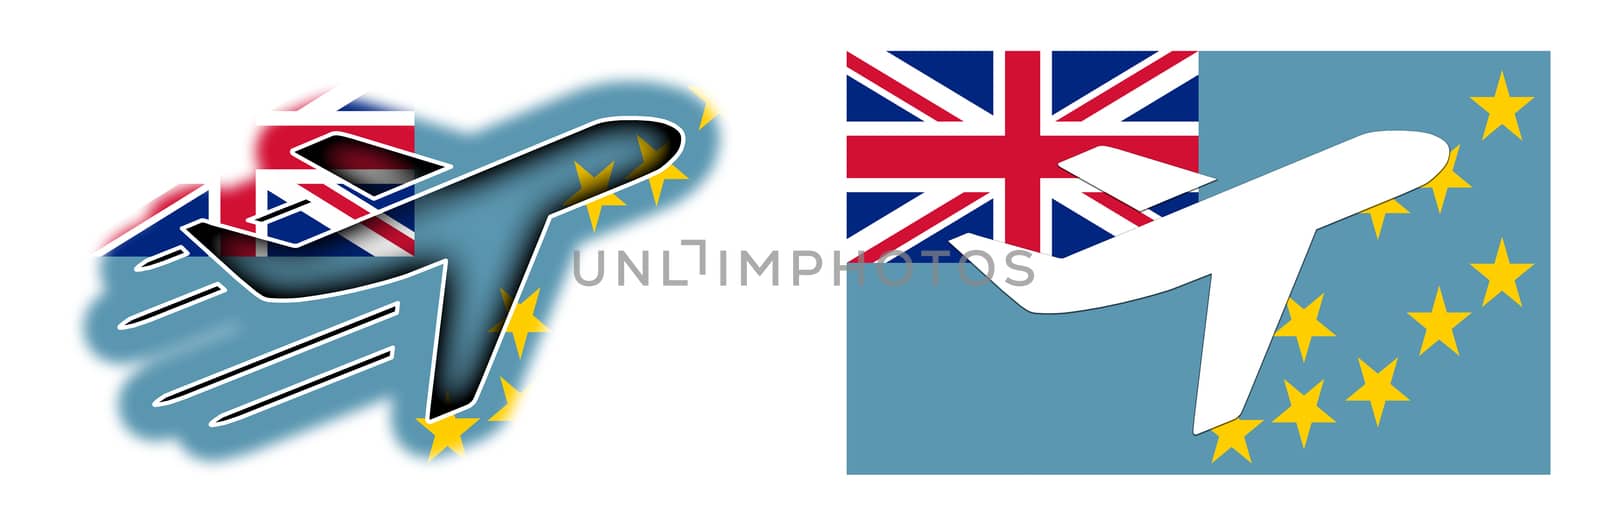 Nation flag - Airplane isolated on white - Tuvalu